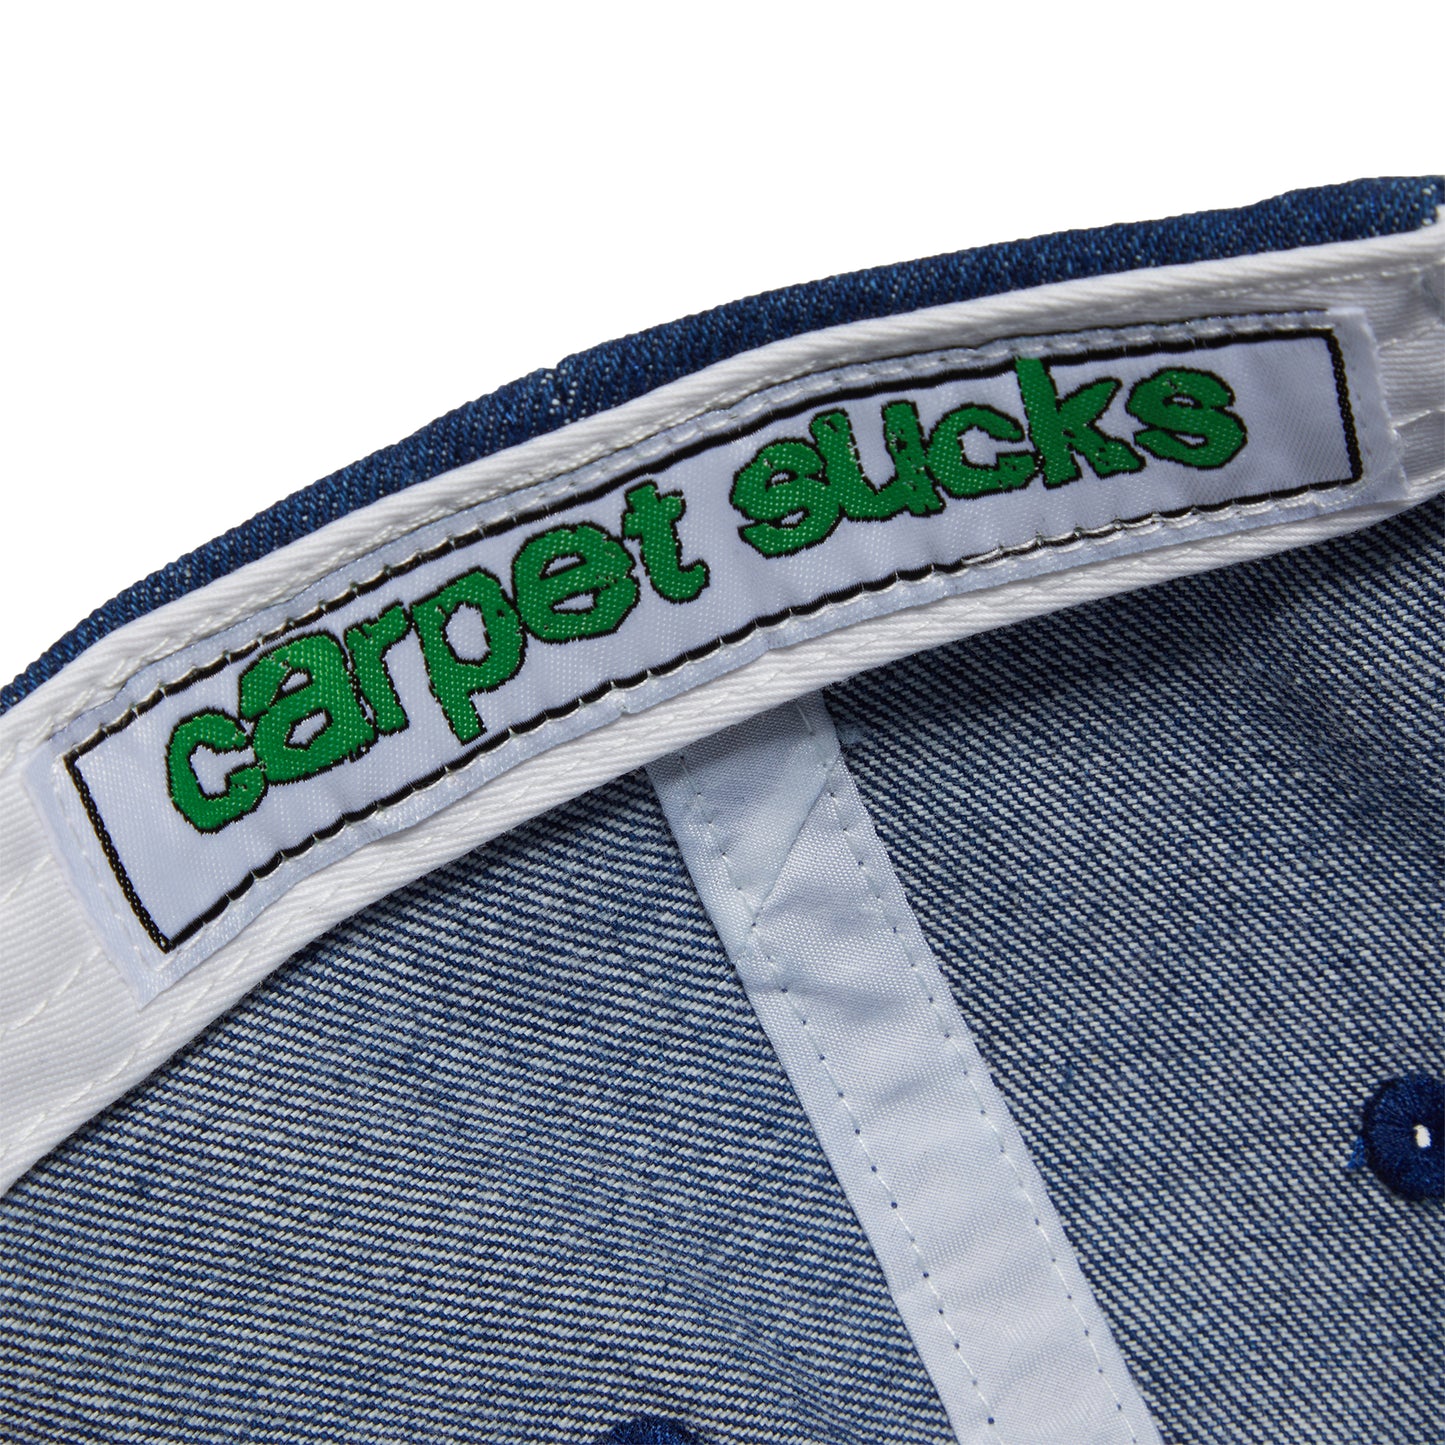 Carpet Company C-star Bleached Denim Hat (Blue)